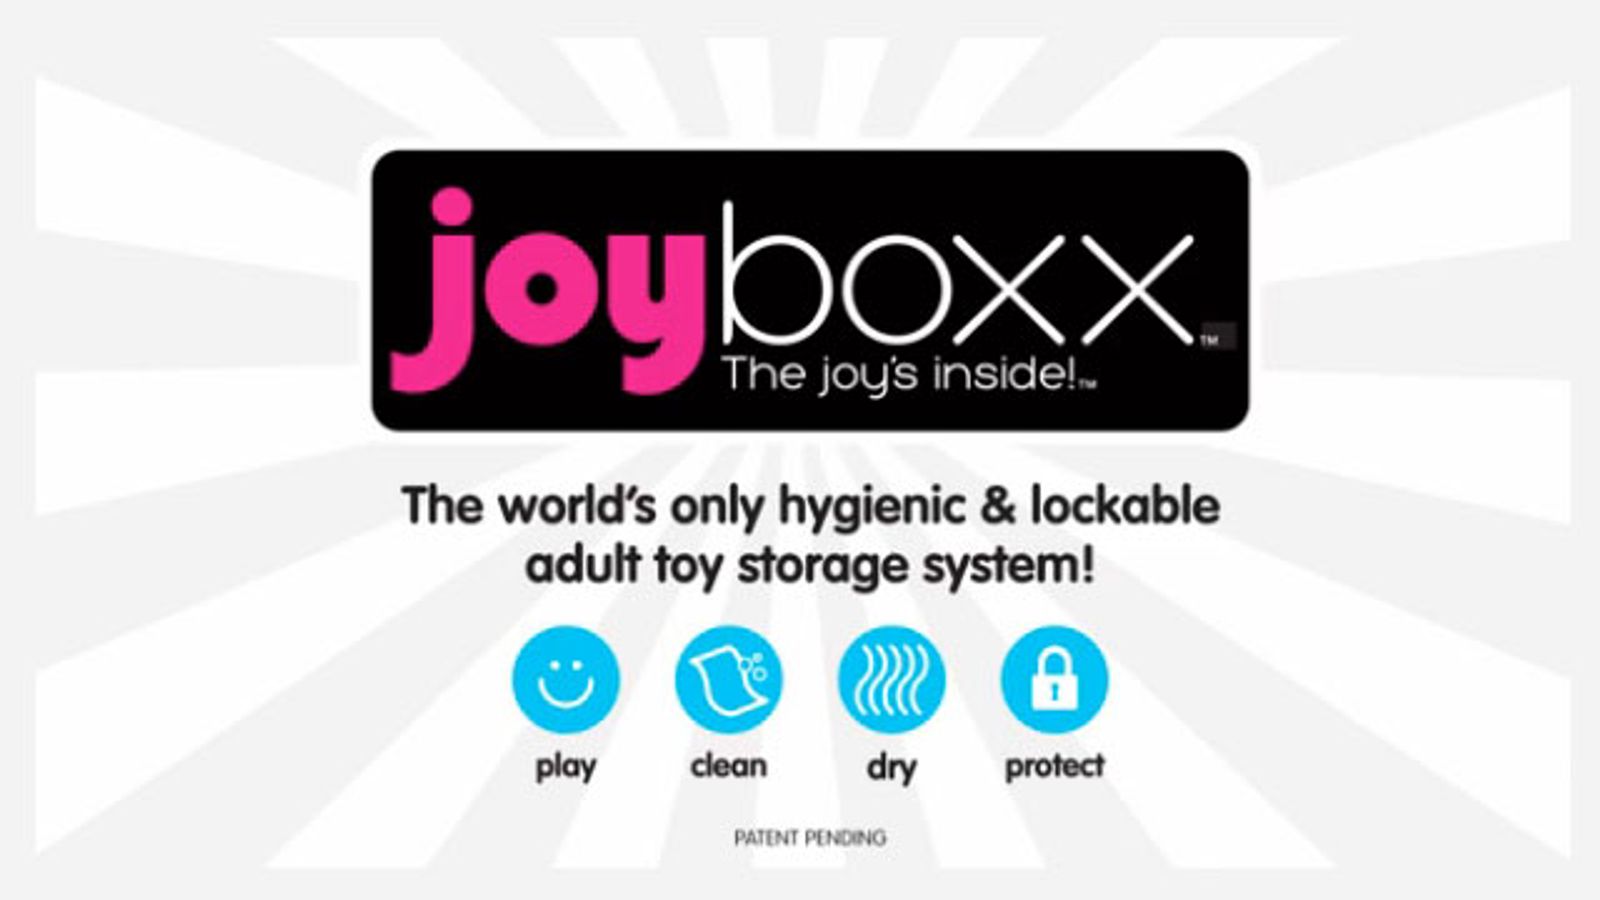 Joyboxx Partners With Lexi Love, Orgasmatronics For Indiegogo.com Campaign